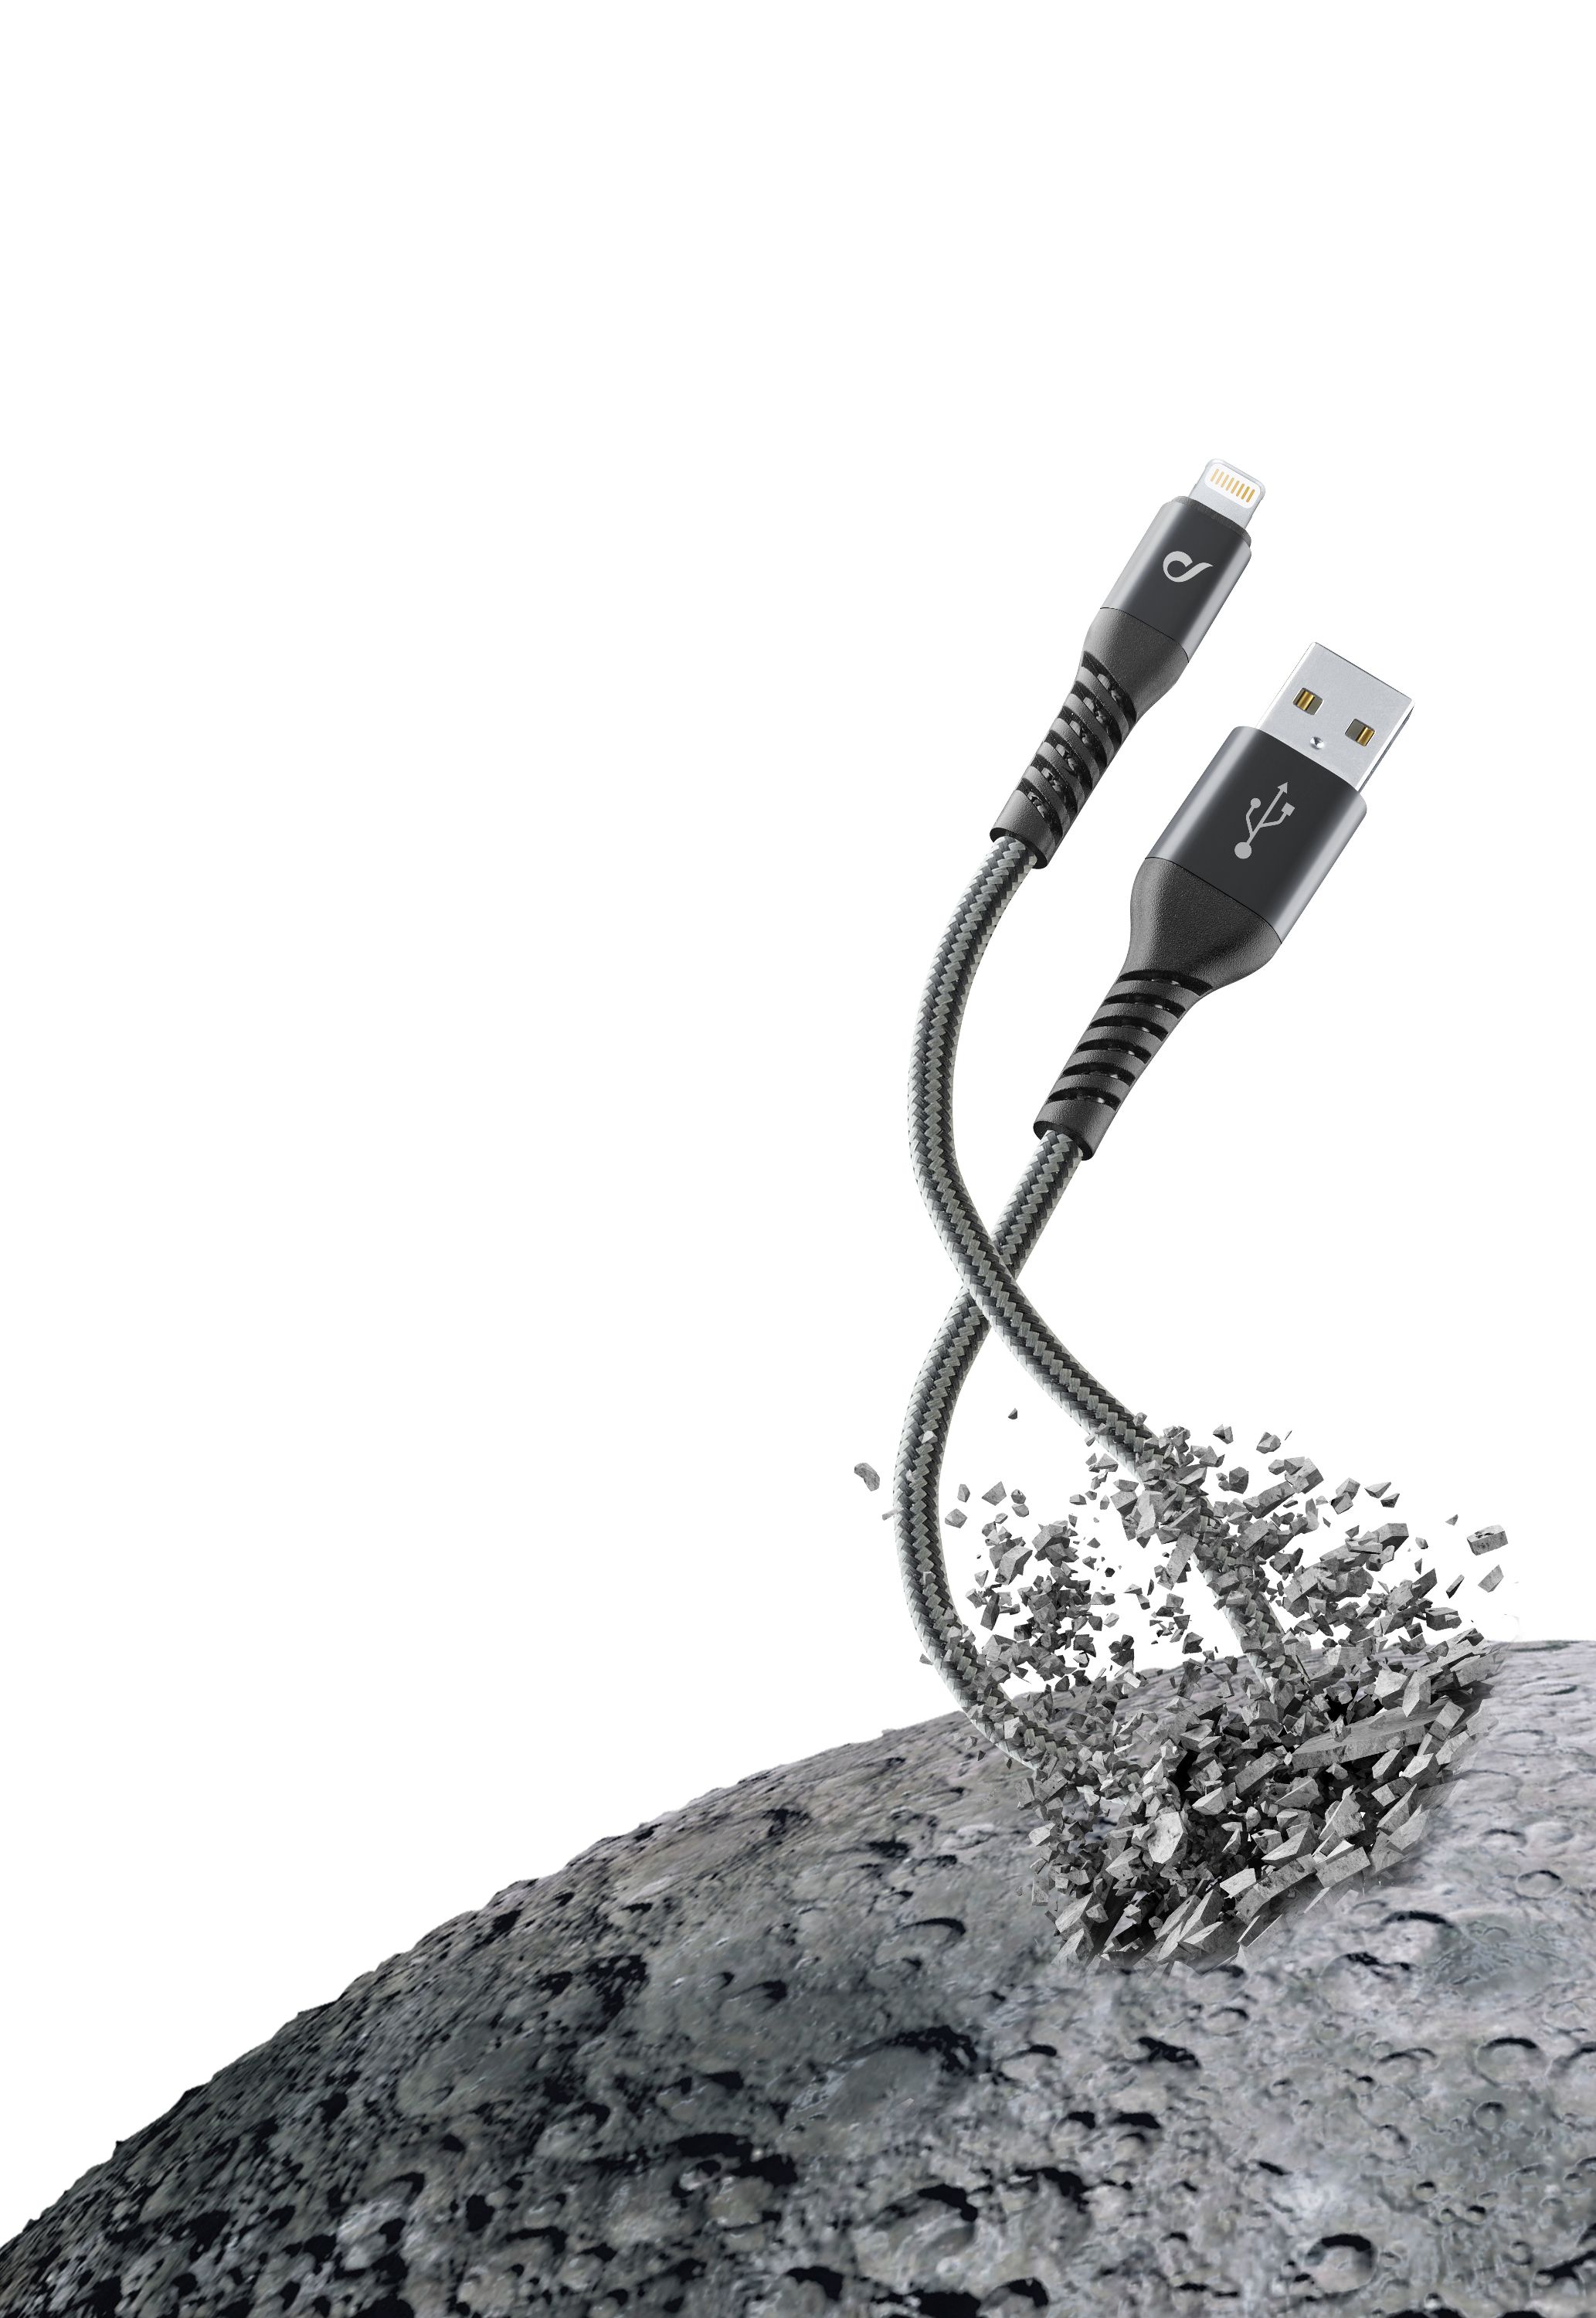 Usb kabel, kevlar Apple lightning 1,2m, zwart